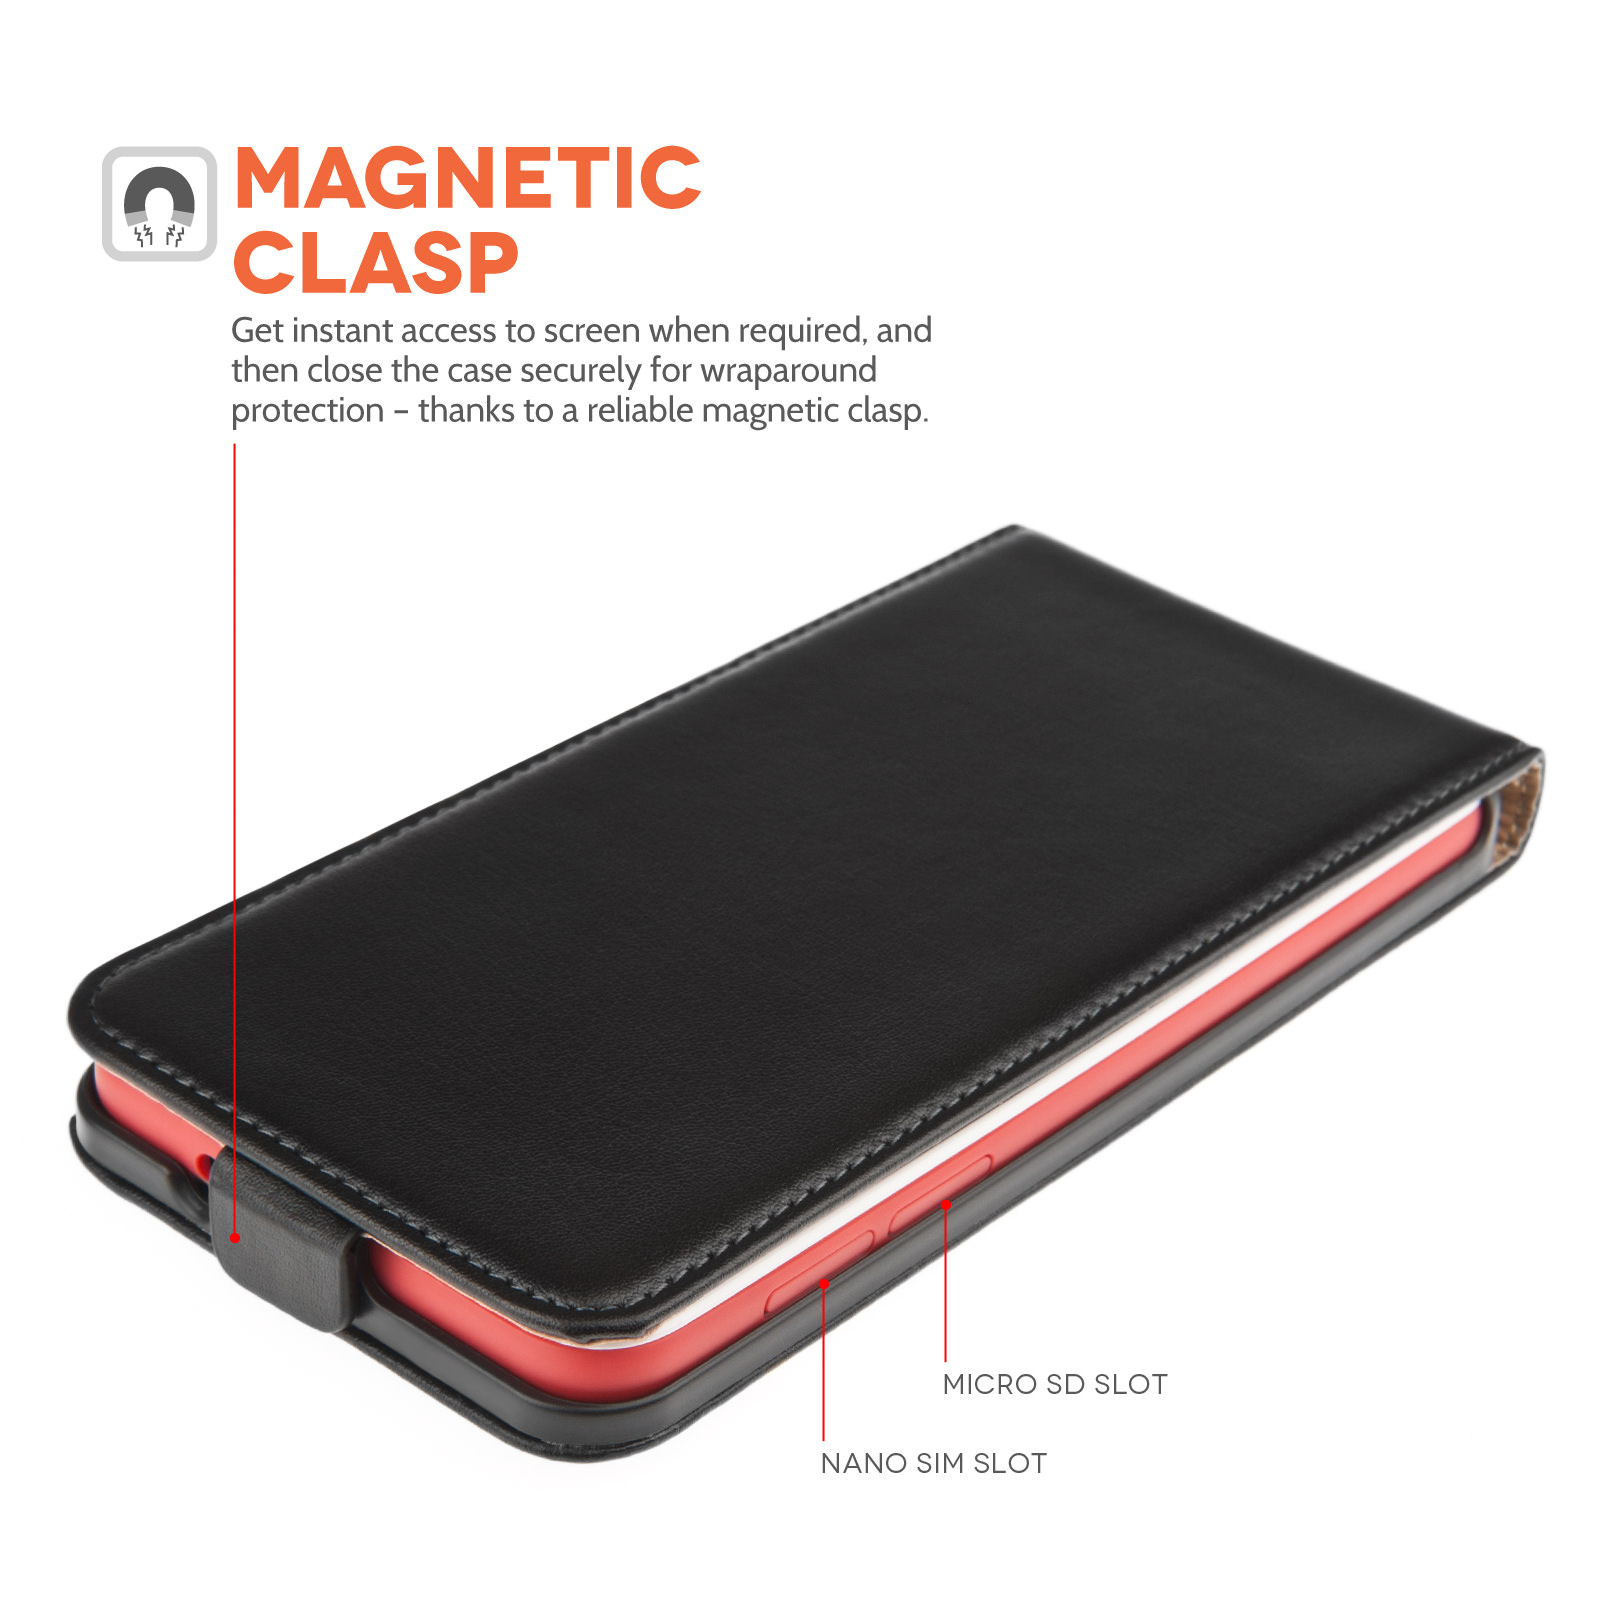 Caseflex HTC Desire EYE Real Leather Flip Case - Black